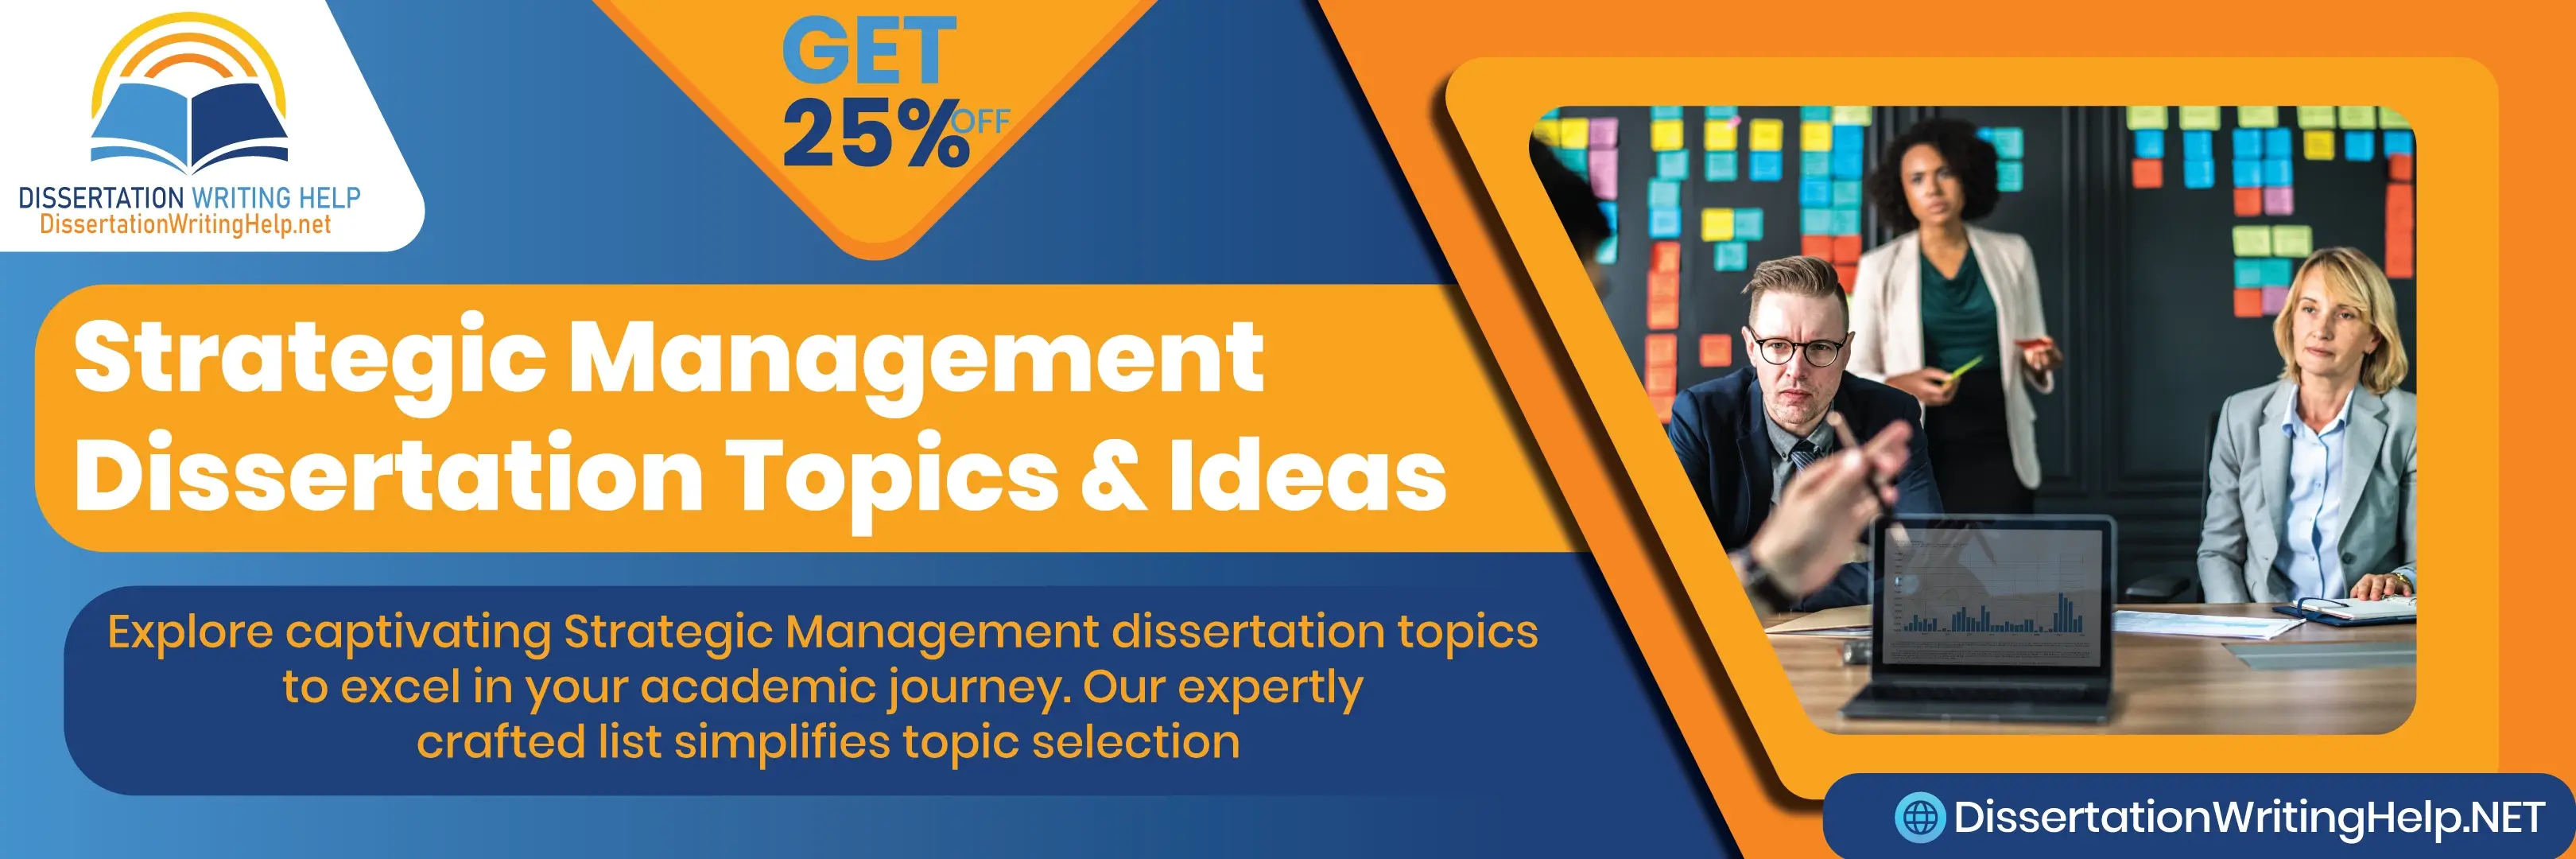 Strategic-Management-Dissertation-Topics-&-Ideas